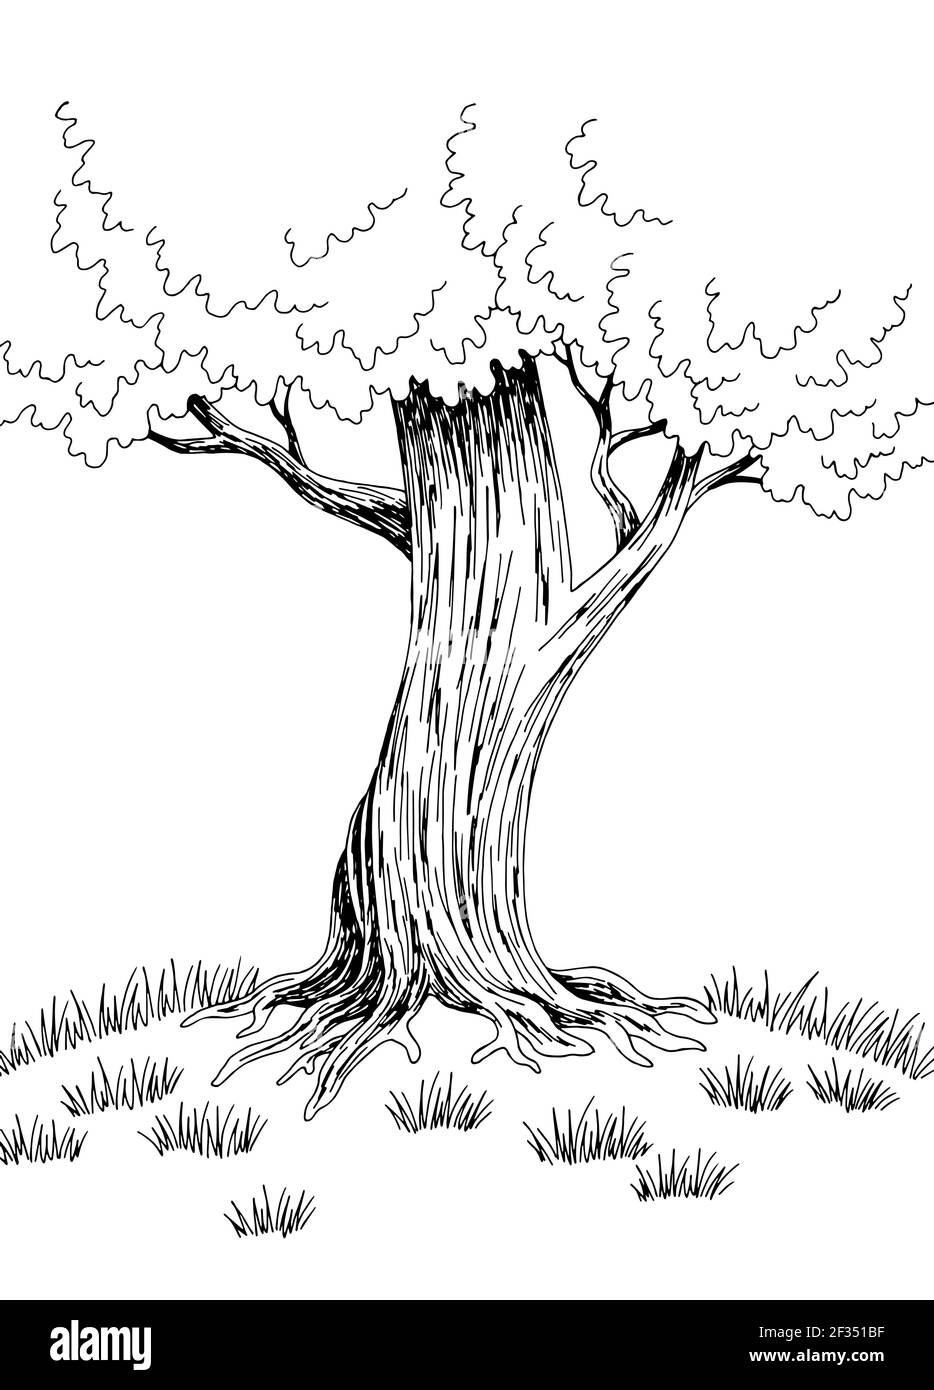 Big tree drawing lines Royalty Free Vector Image